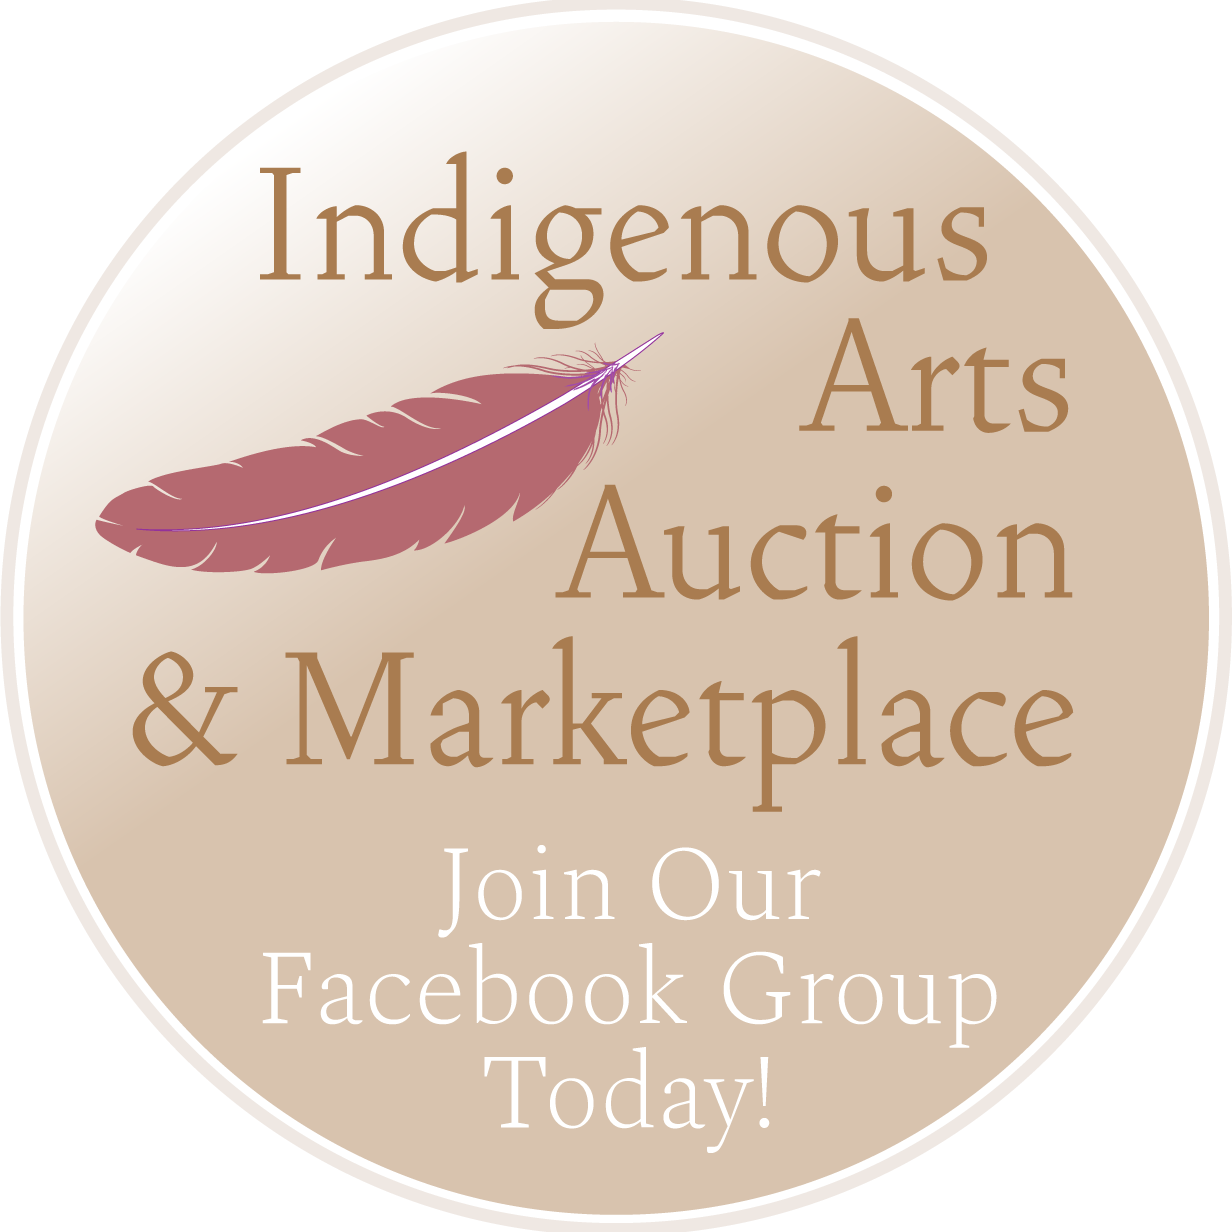 Facebook auction, art market, Indigenous art, native american art, first nations art, marketplace, shop